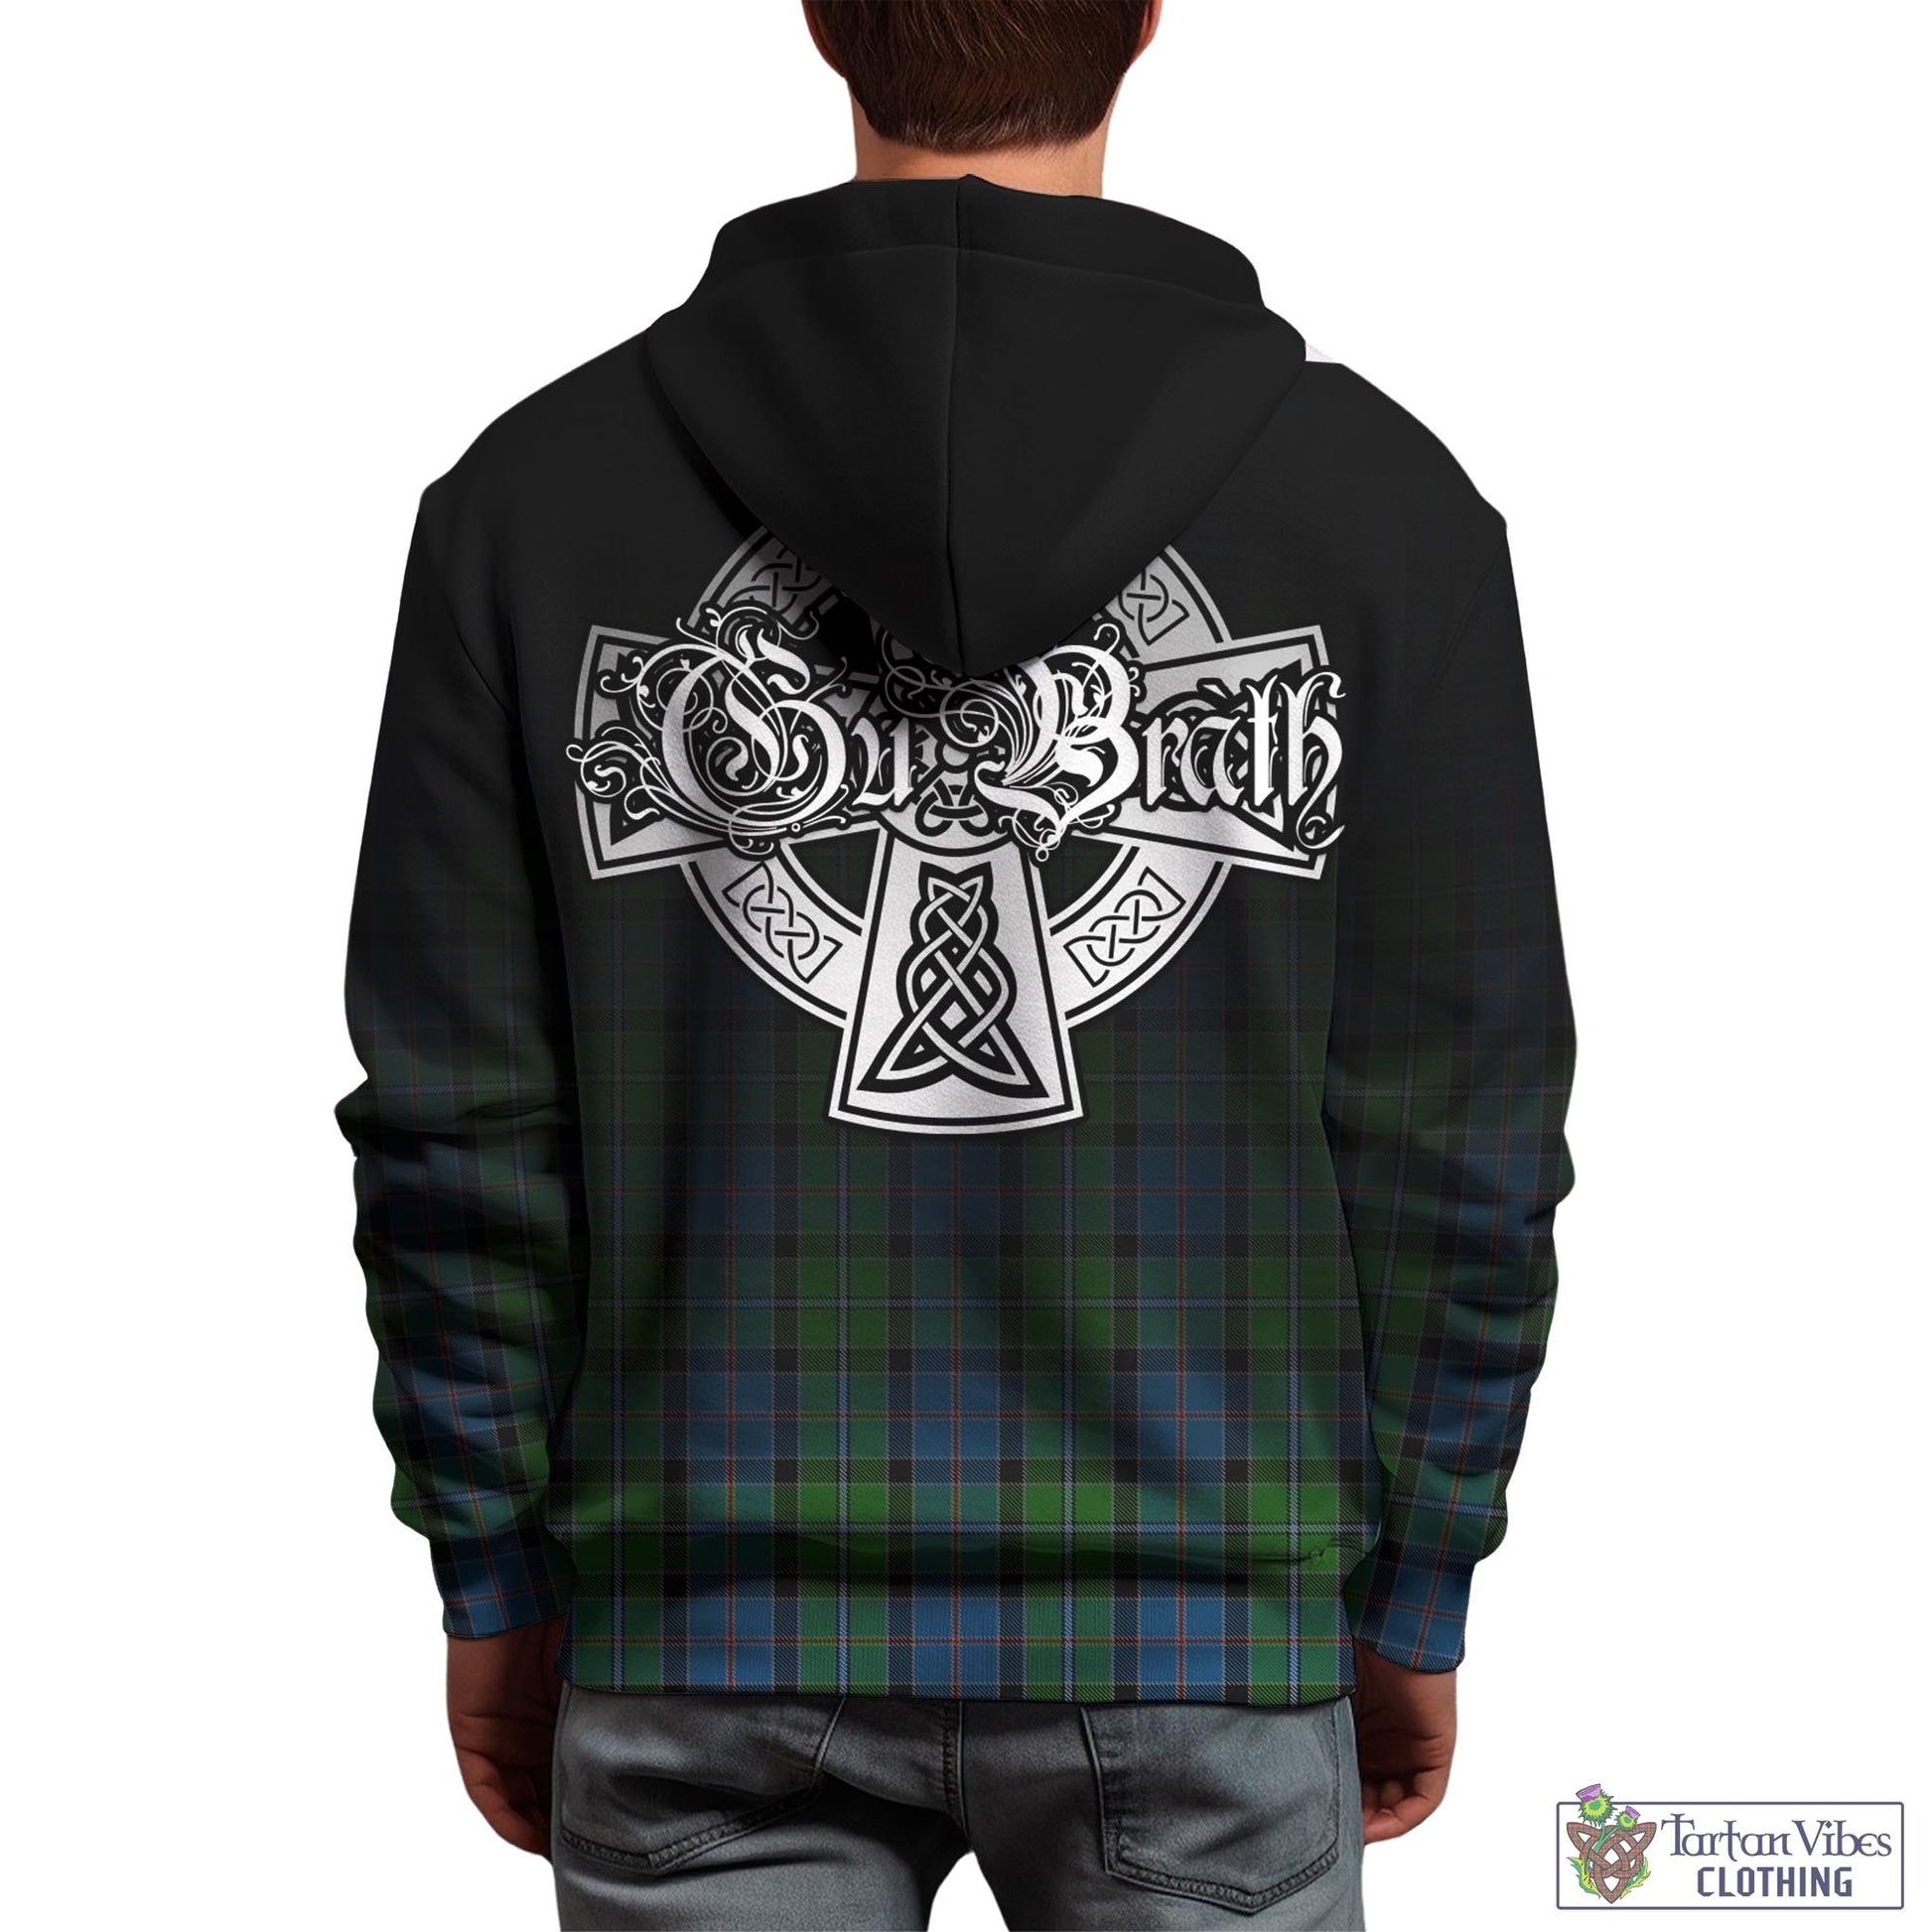 Tartan Vibes Clothing Stirling Tartan Hoodie Featuring Alba Gu Brath Family Crest Celtic Inspired